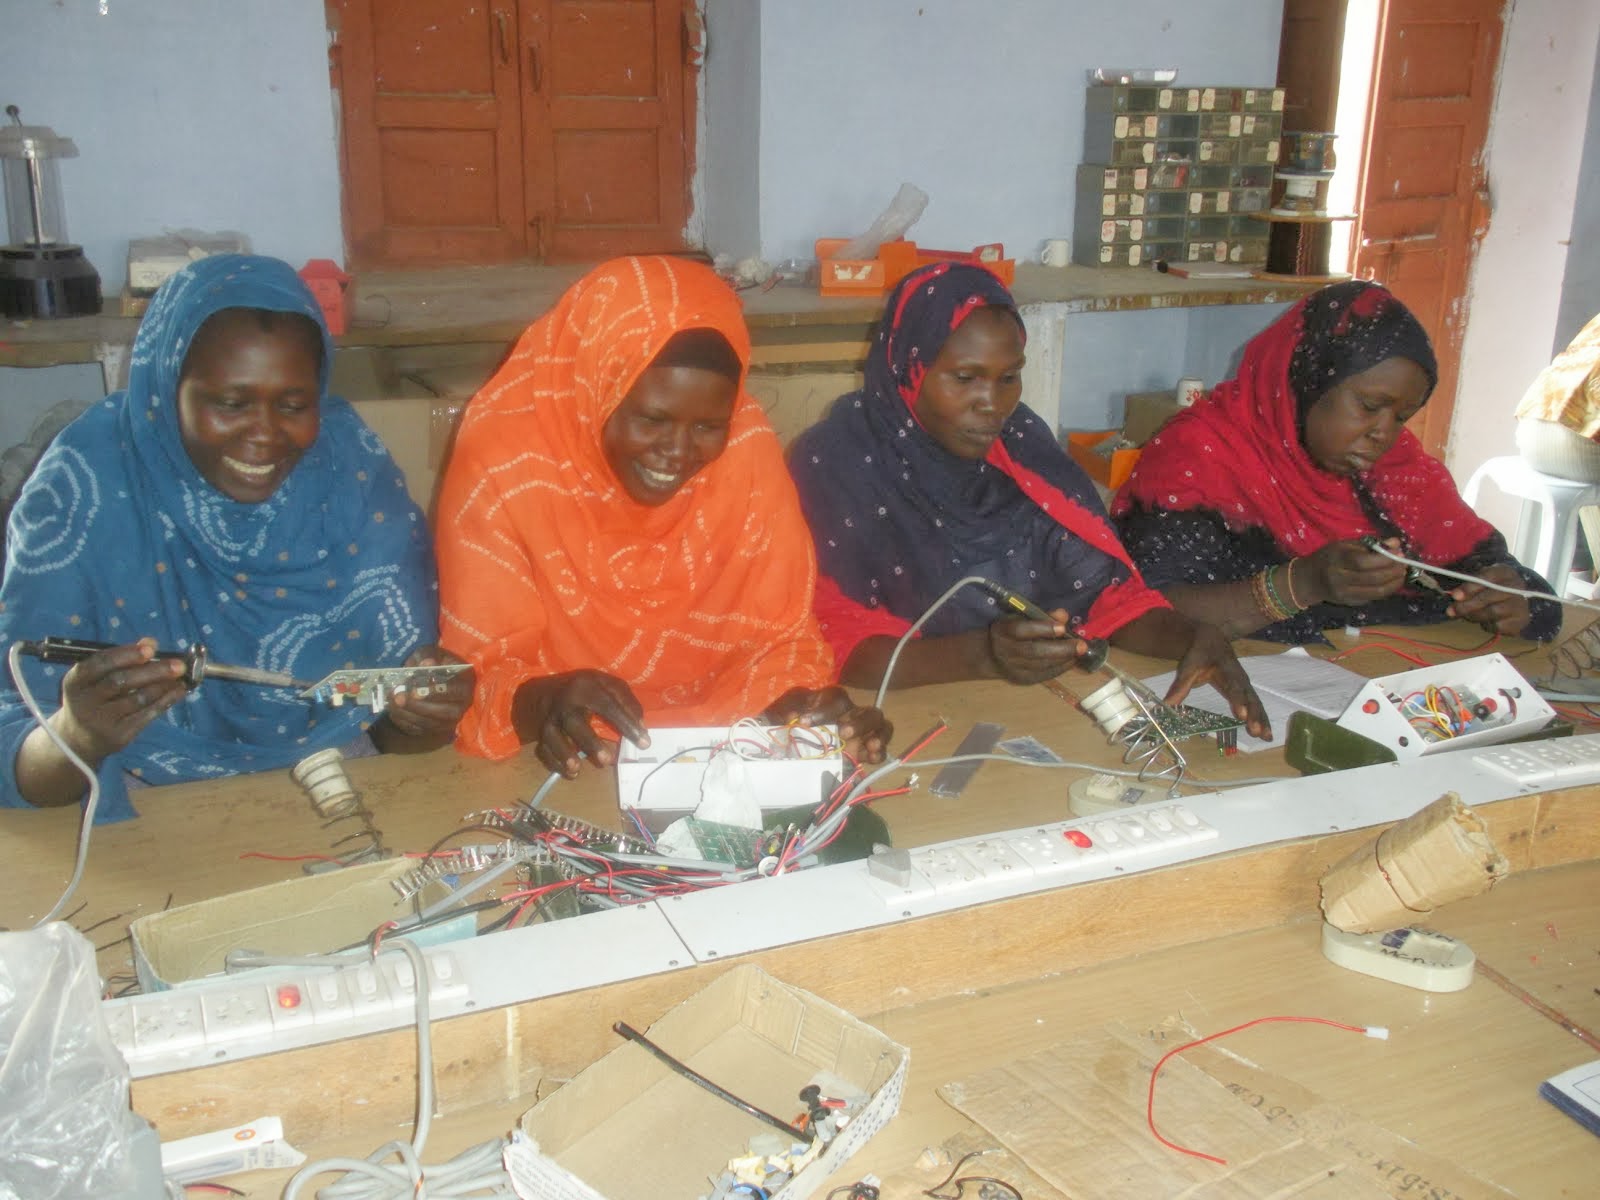 Sudan Barefoot Women Solar Engineers